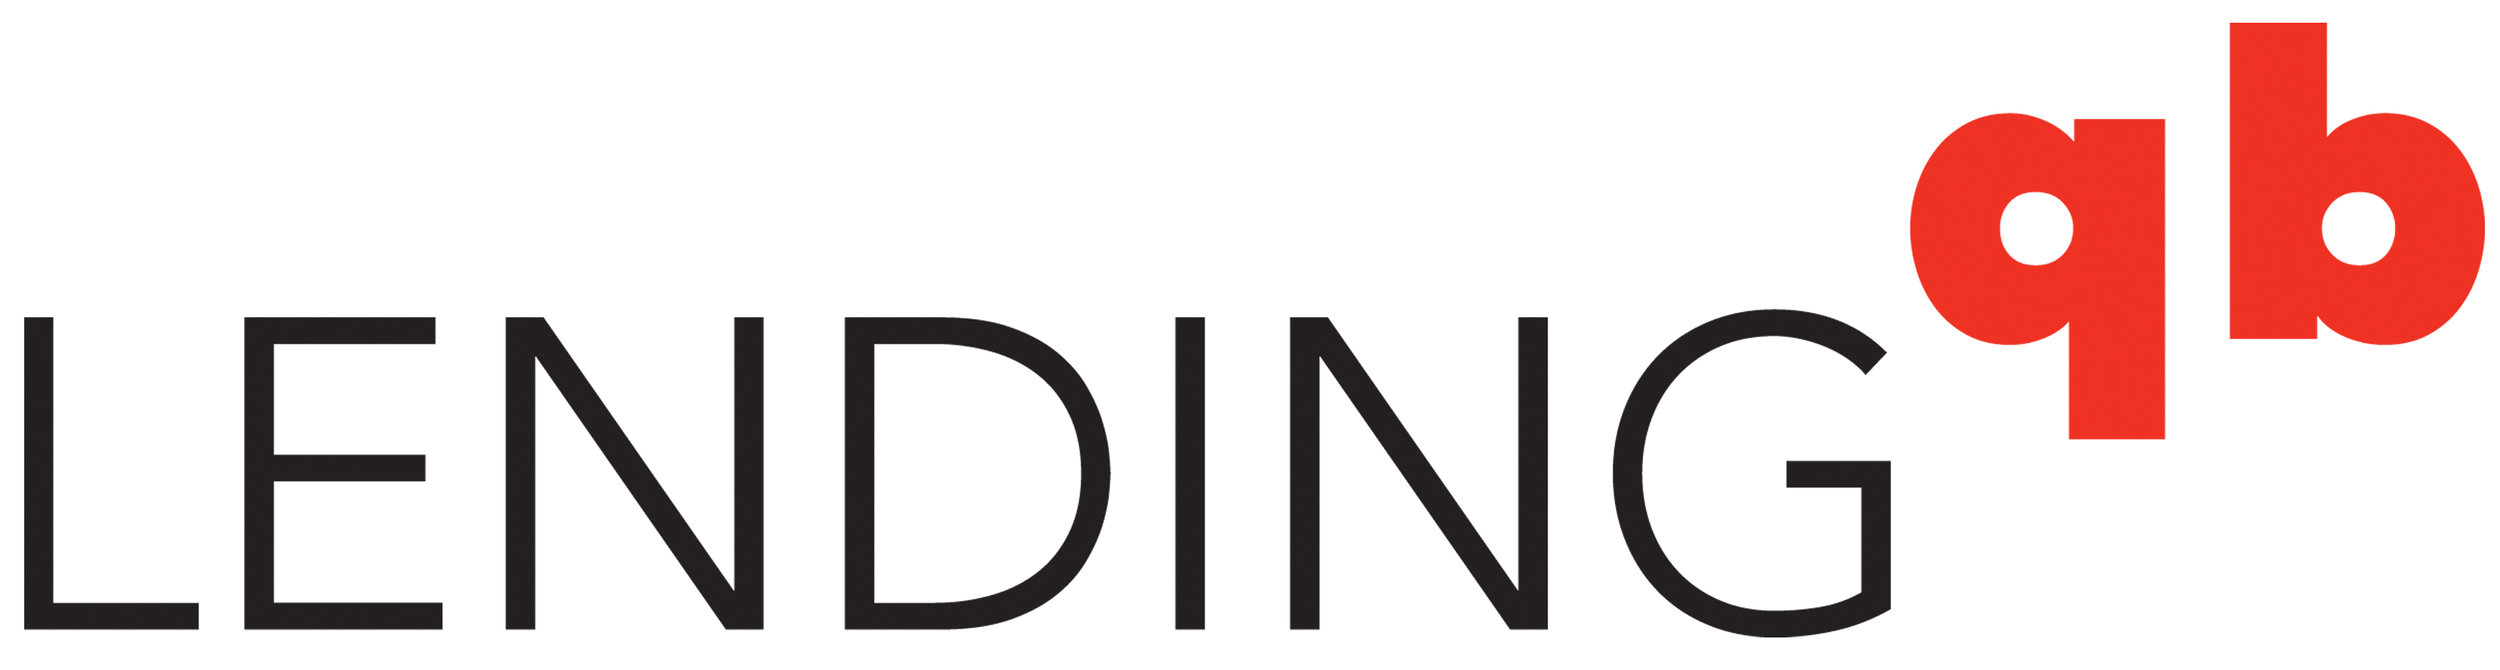 LendingQB logo.jpg